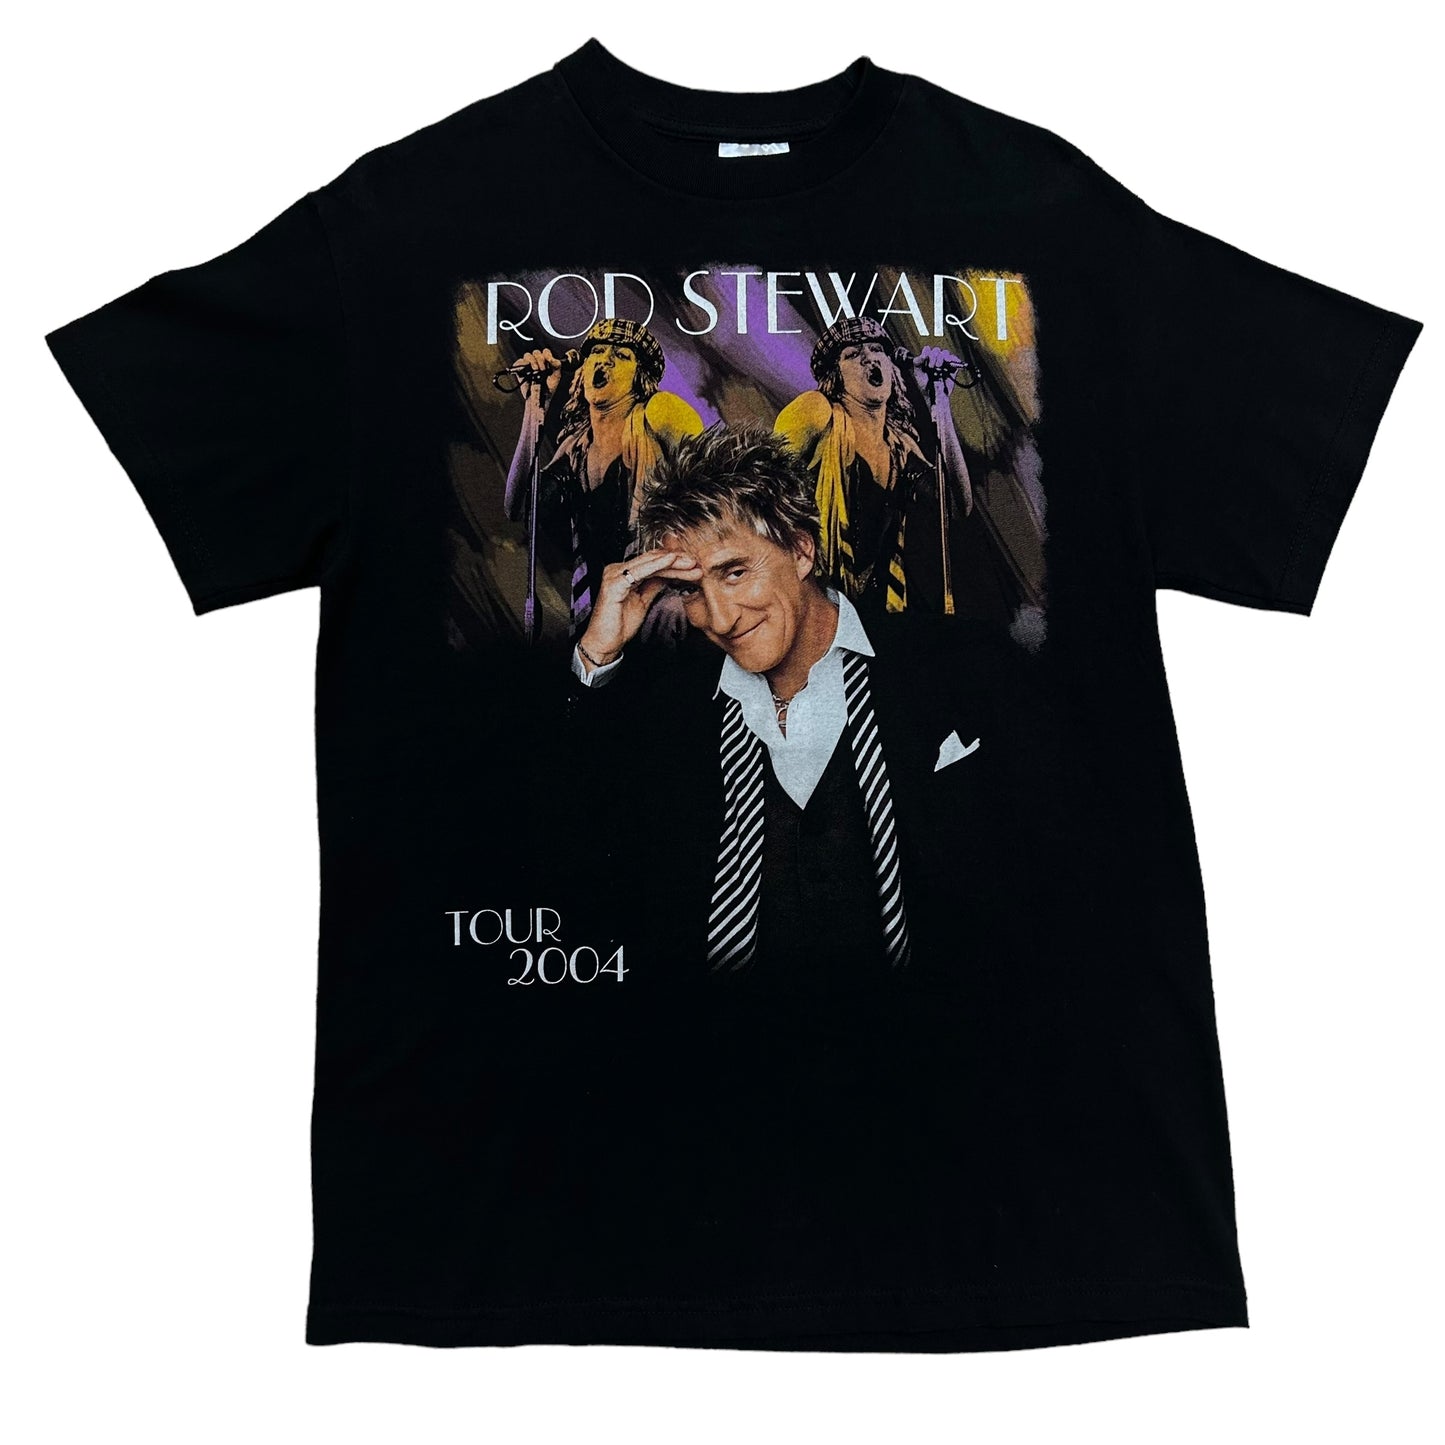 Early 2000s Rod Stewart Tour 2004 Black Graphic T-Shirt - Size Medium